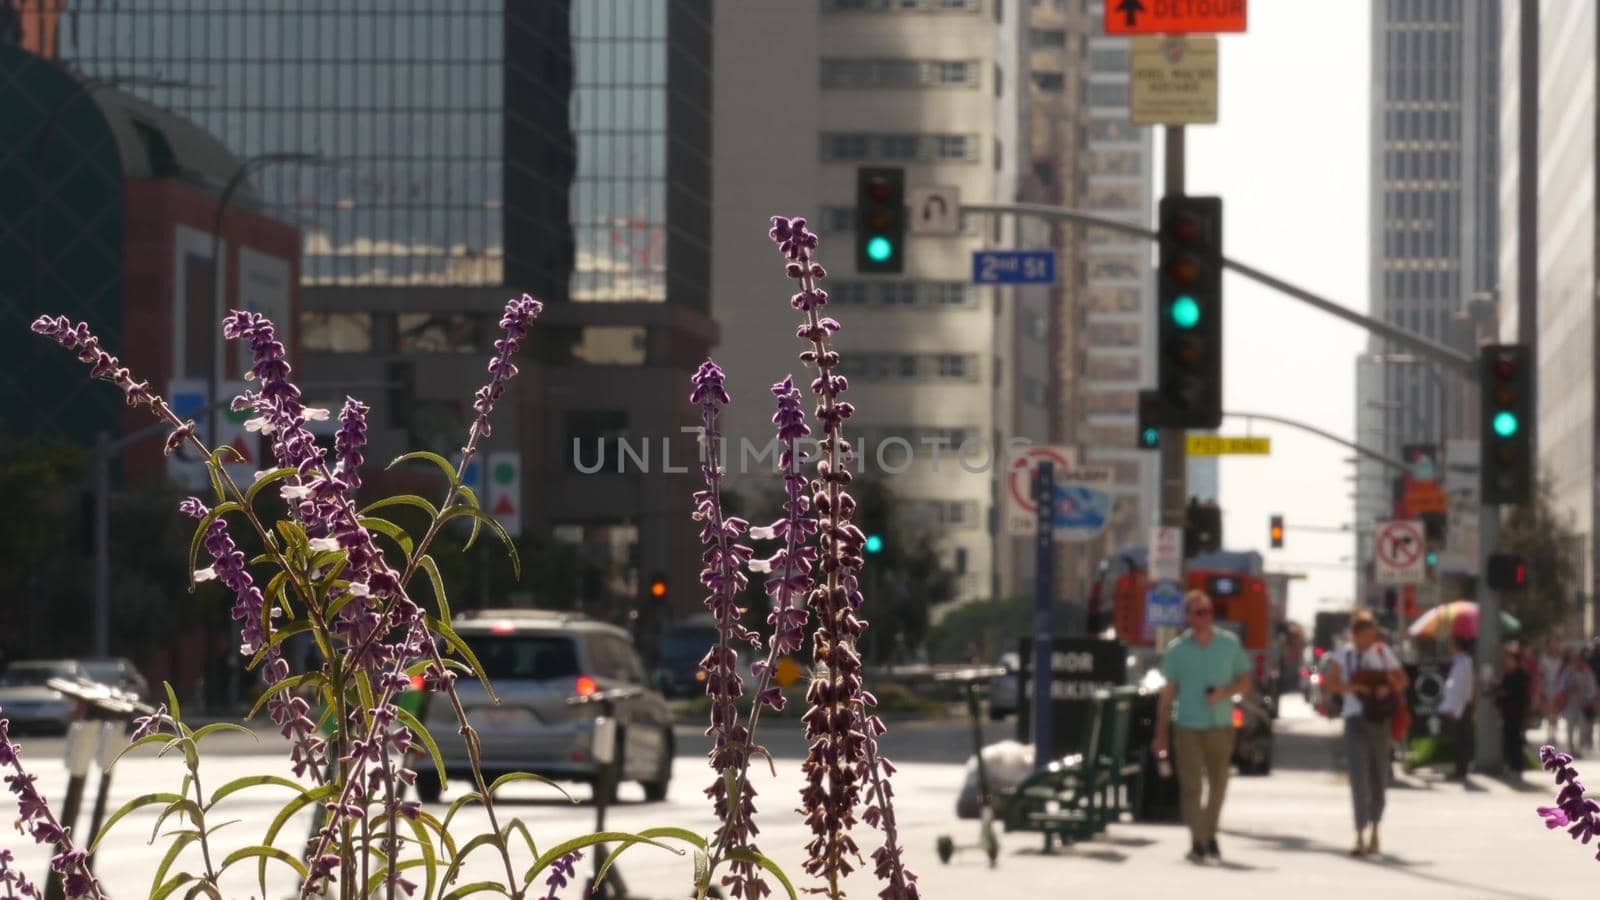 LOS ANGELES, CALIFORNIA, USA - 30 OCT 2019: People walking in metropolis, pedestrians on walkway in urban downtown. Citizens on street in financial district. City dwellers in LA among skyscrapers by DogoraSun